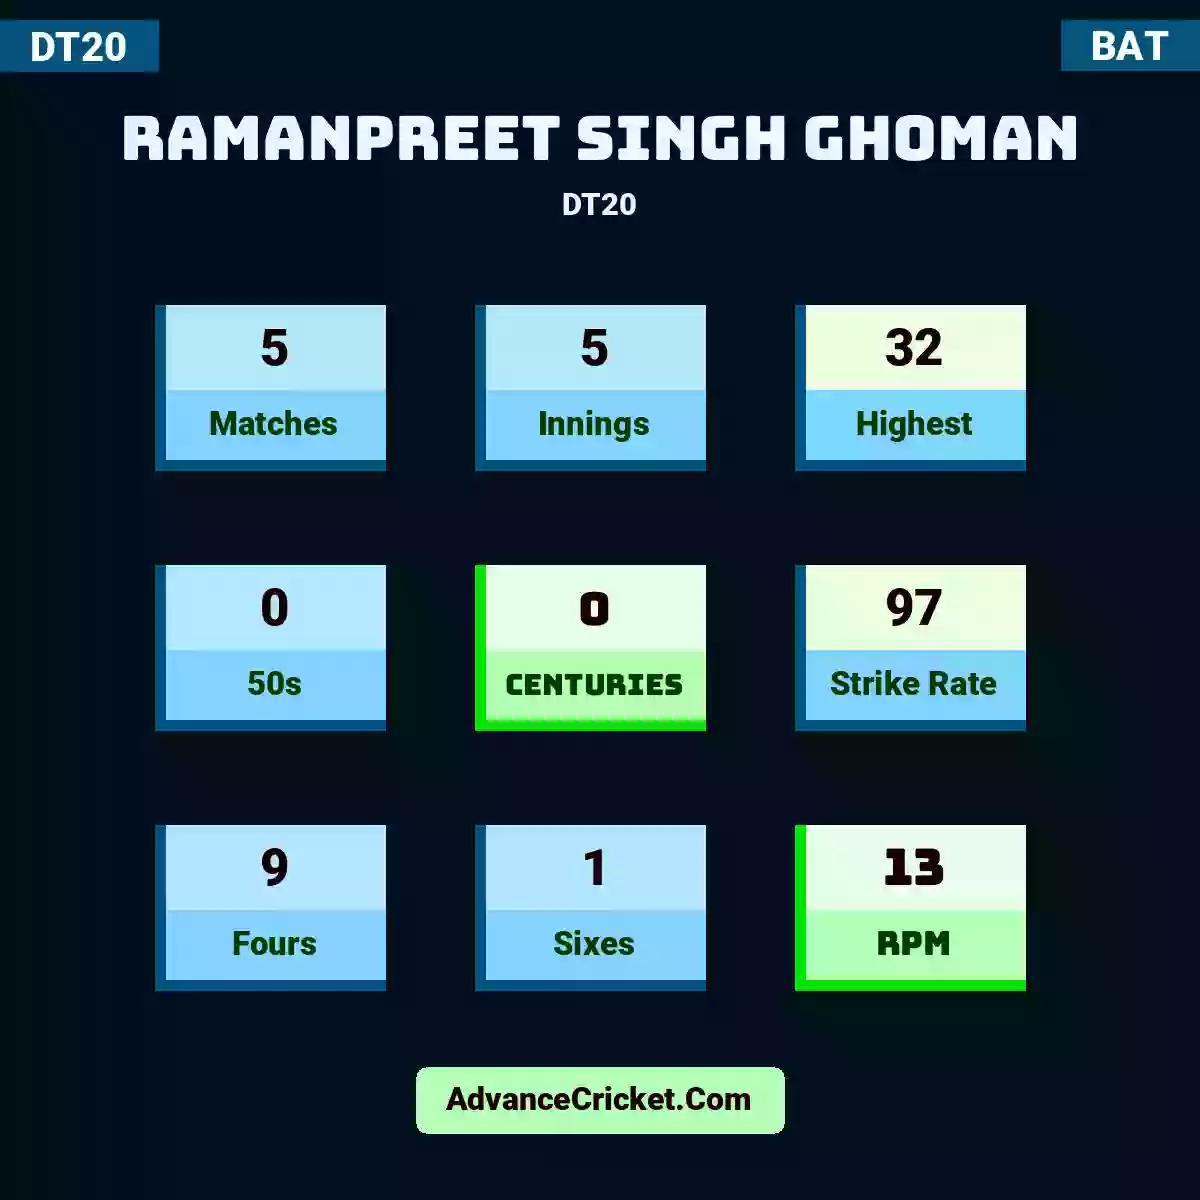 Ramanpreet Singh Ghoman DT20 , Ramanpreet Singh Ghoman played 5 matches, scored 32 runs as highest, 0 half-centuries, and 0 centuries, with a strike rate of 97. R.Singh.Ghoman hit 9 fours and 1 sixes, with an RPM of 13.